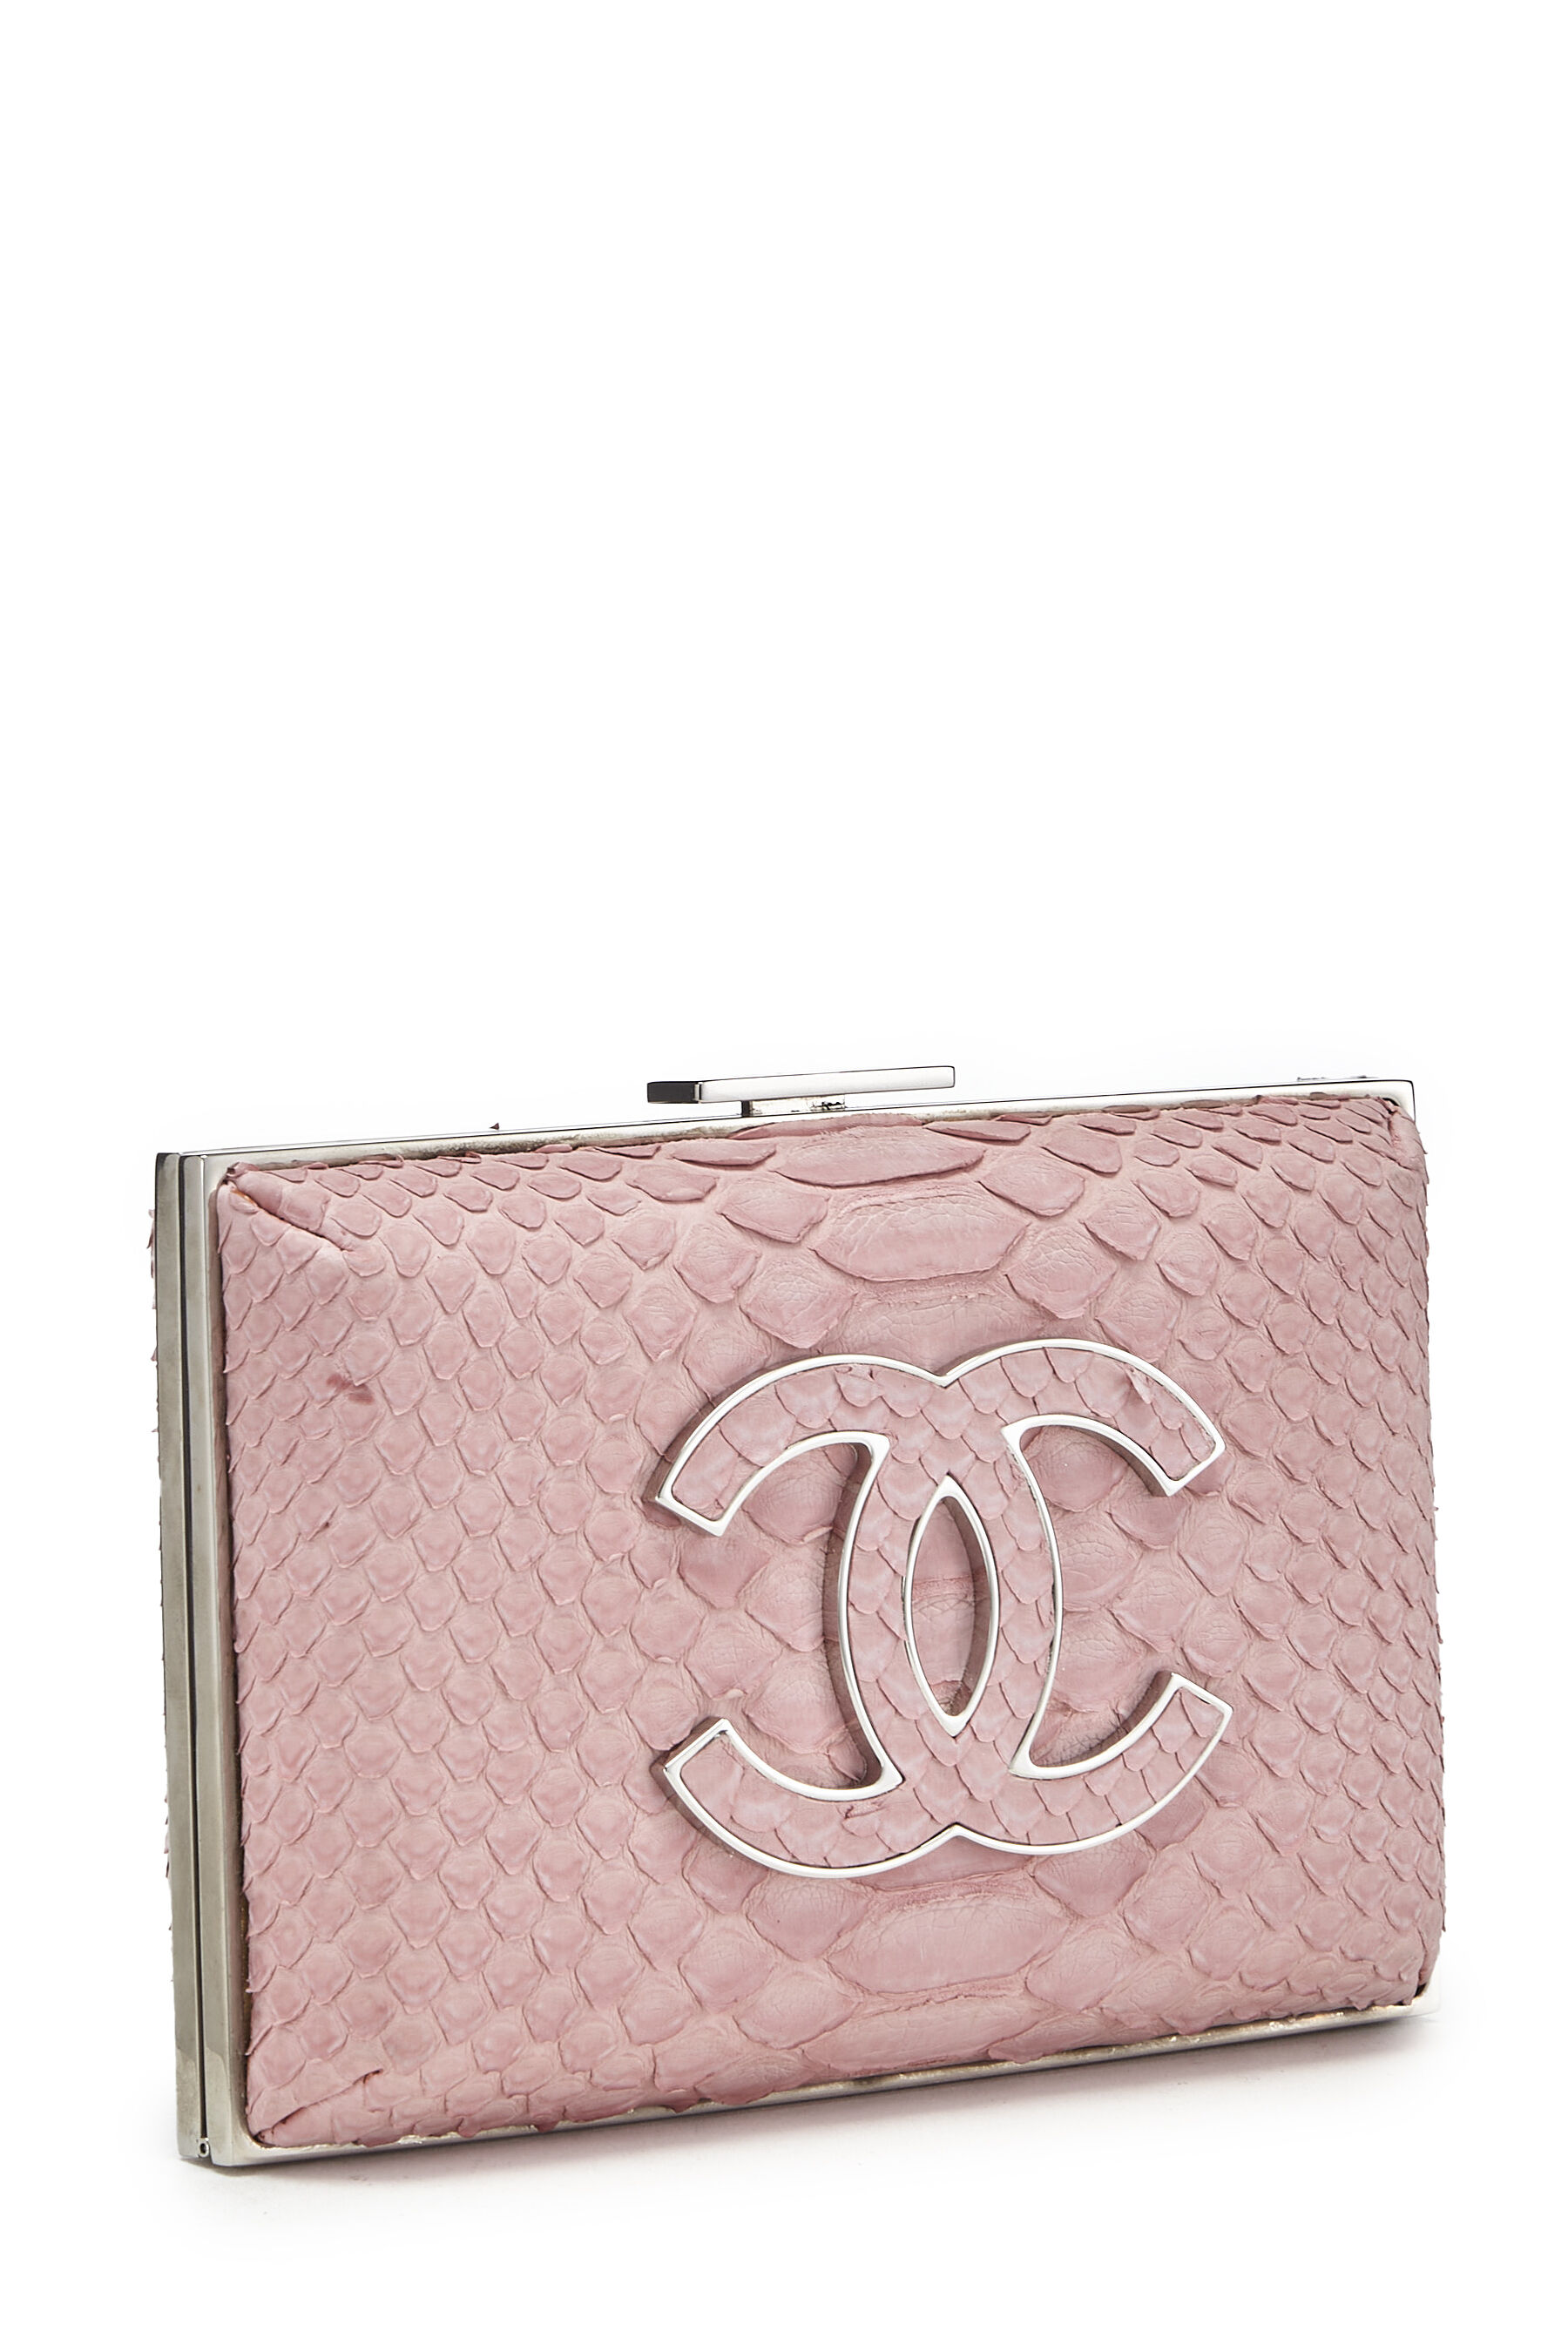 Chanel CC Clutch Mini